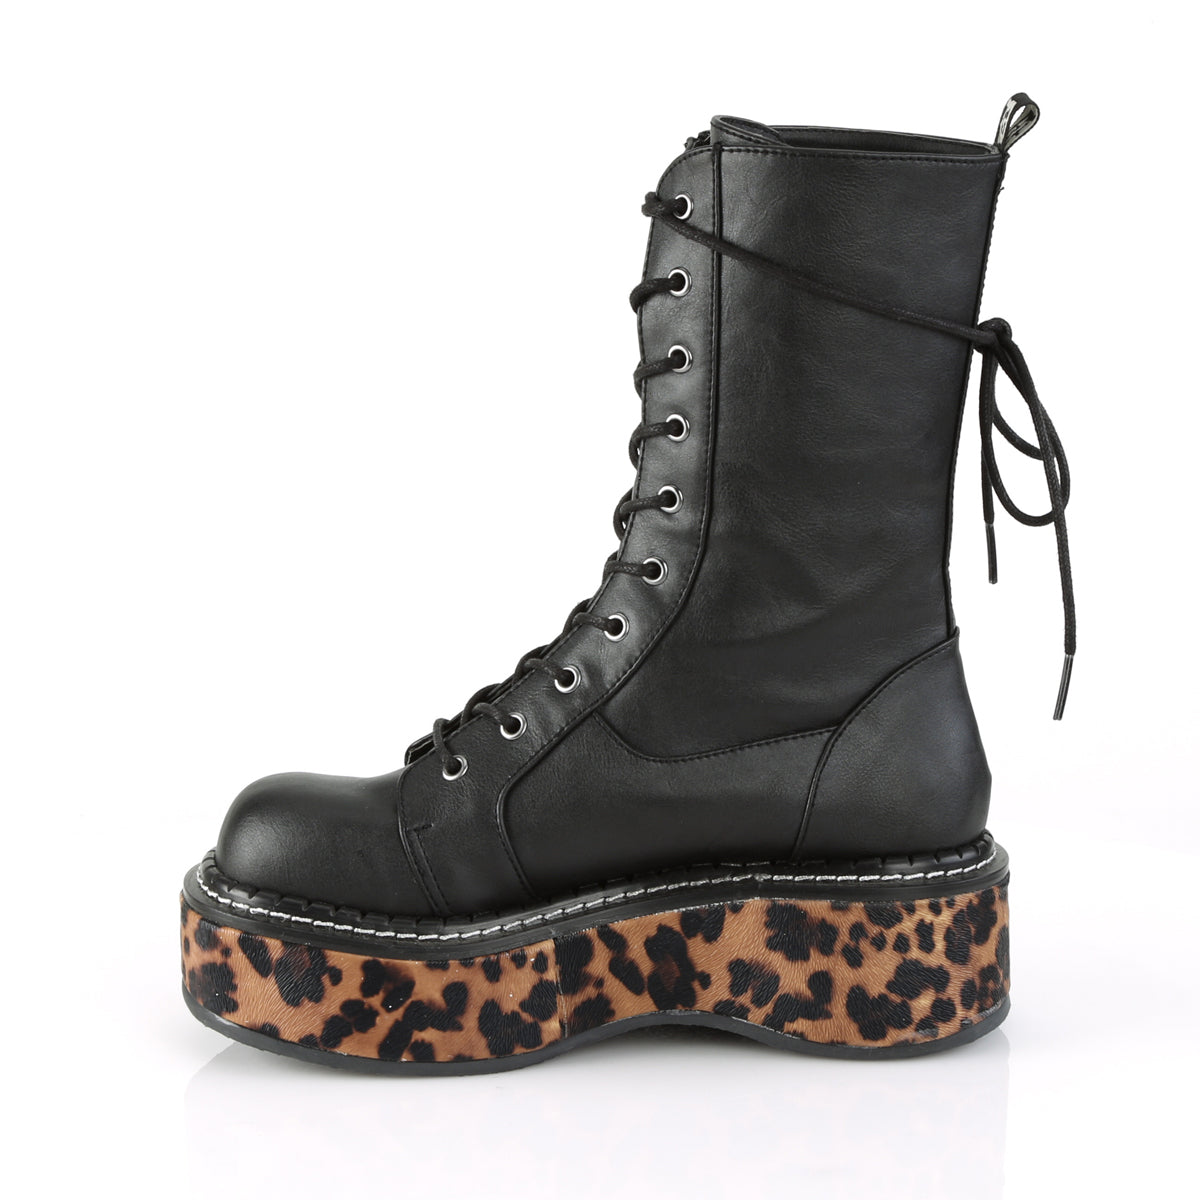 EMILY-350 Alternative Footwear Demoniacult Women's Mid-Calf & Knee High Boots Black-Leopard Print Vegan Leather